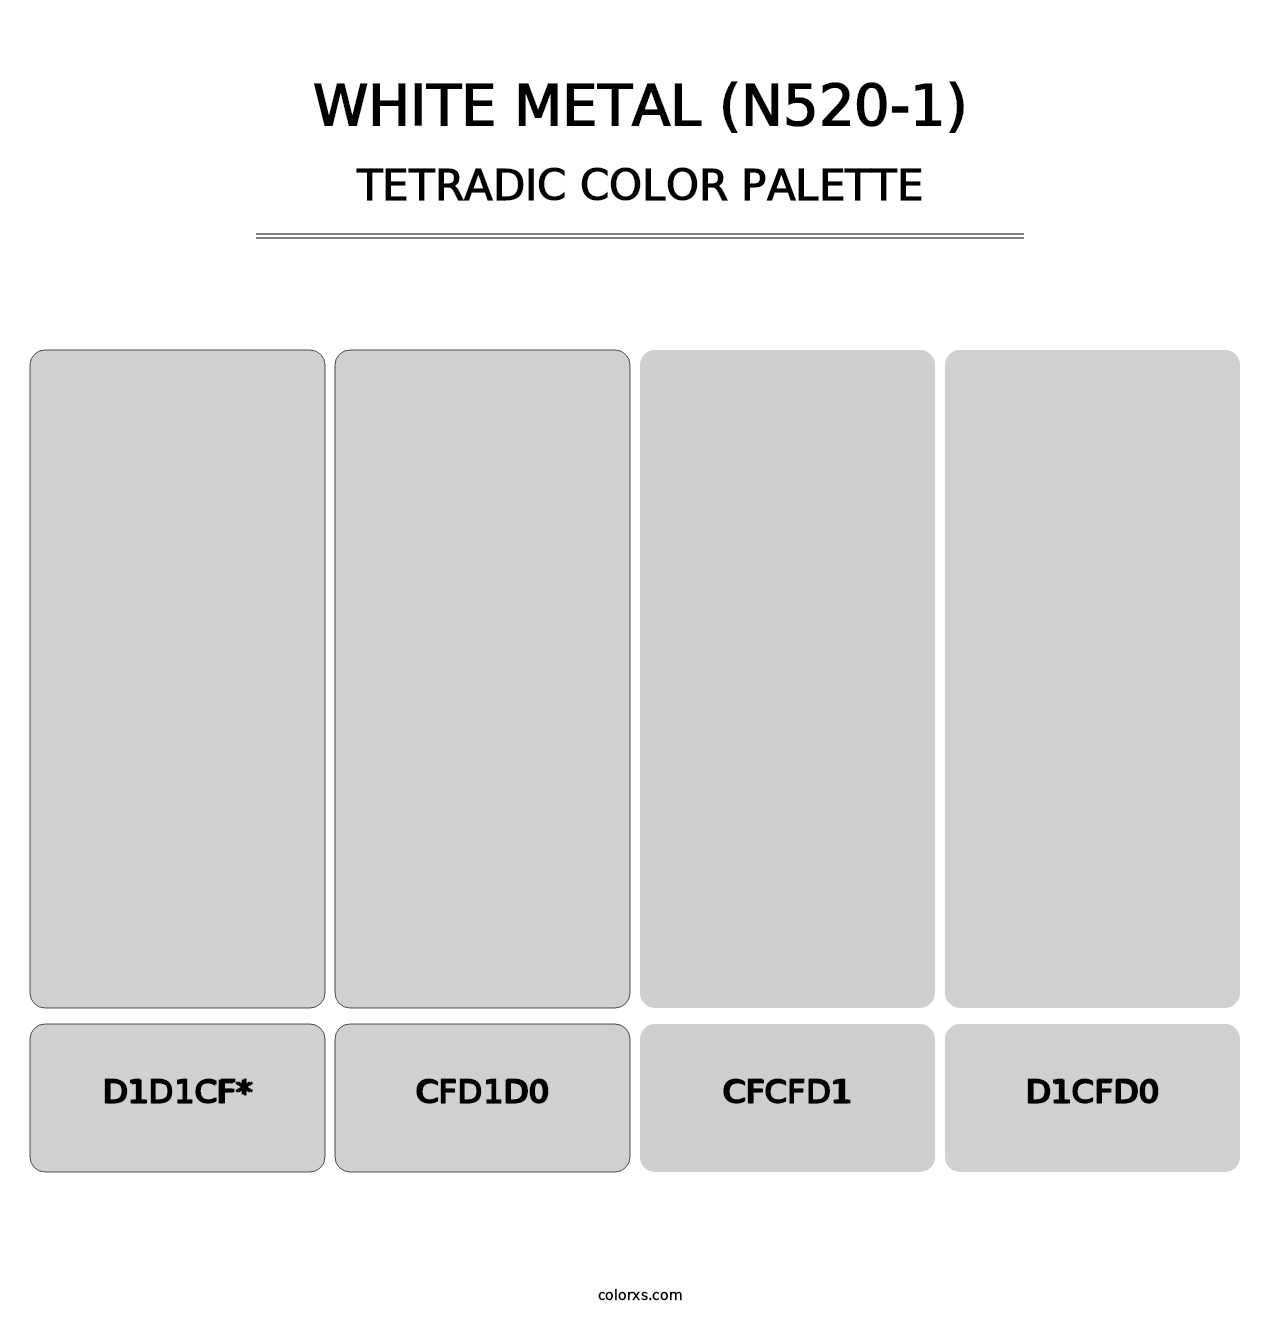 White Metal (N520-1) - Tetradic Color Palette